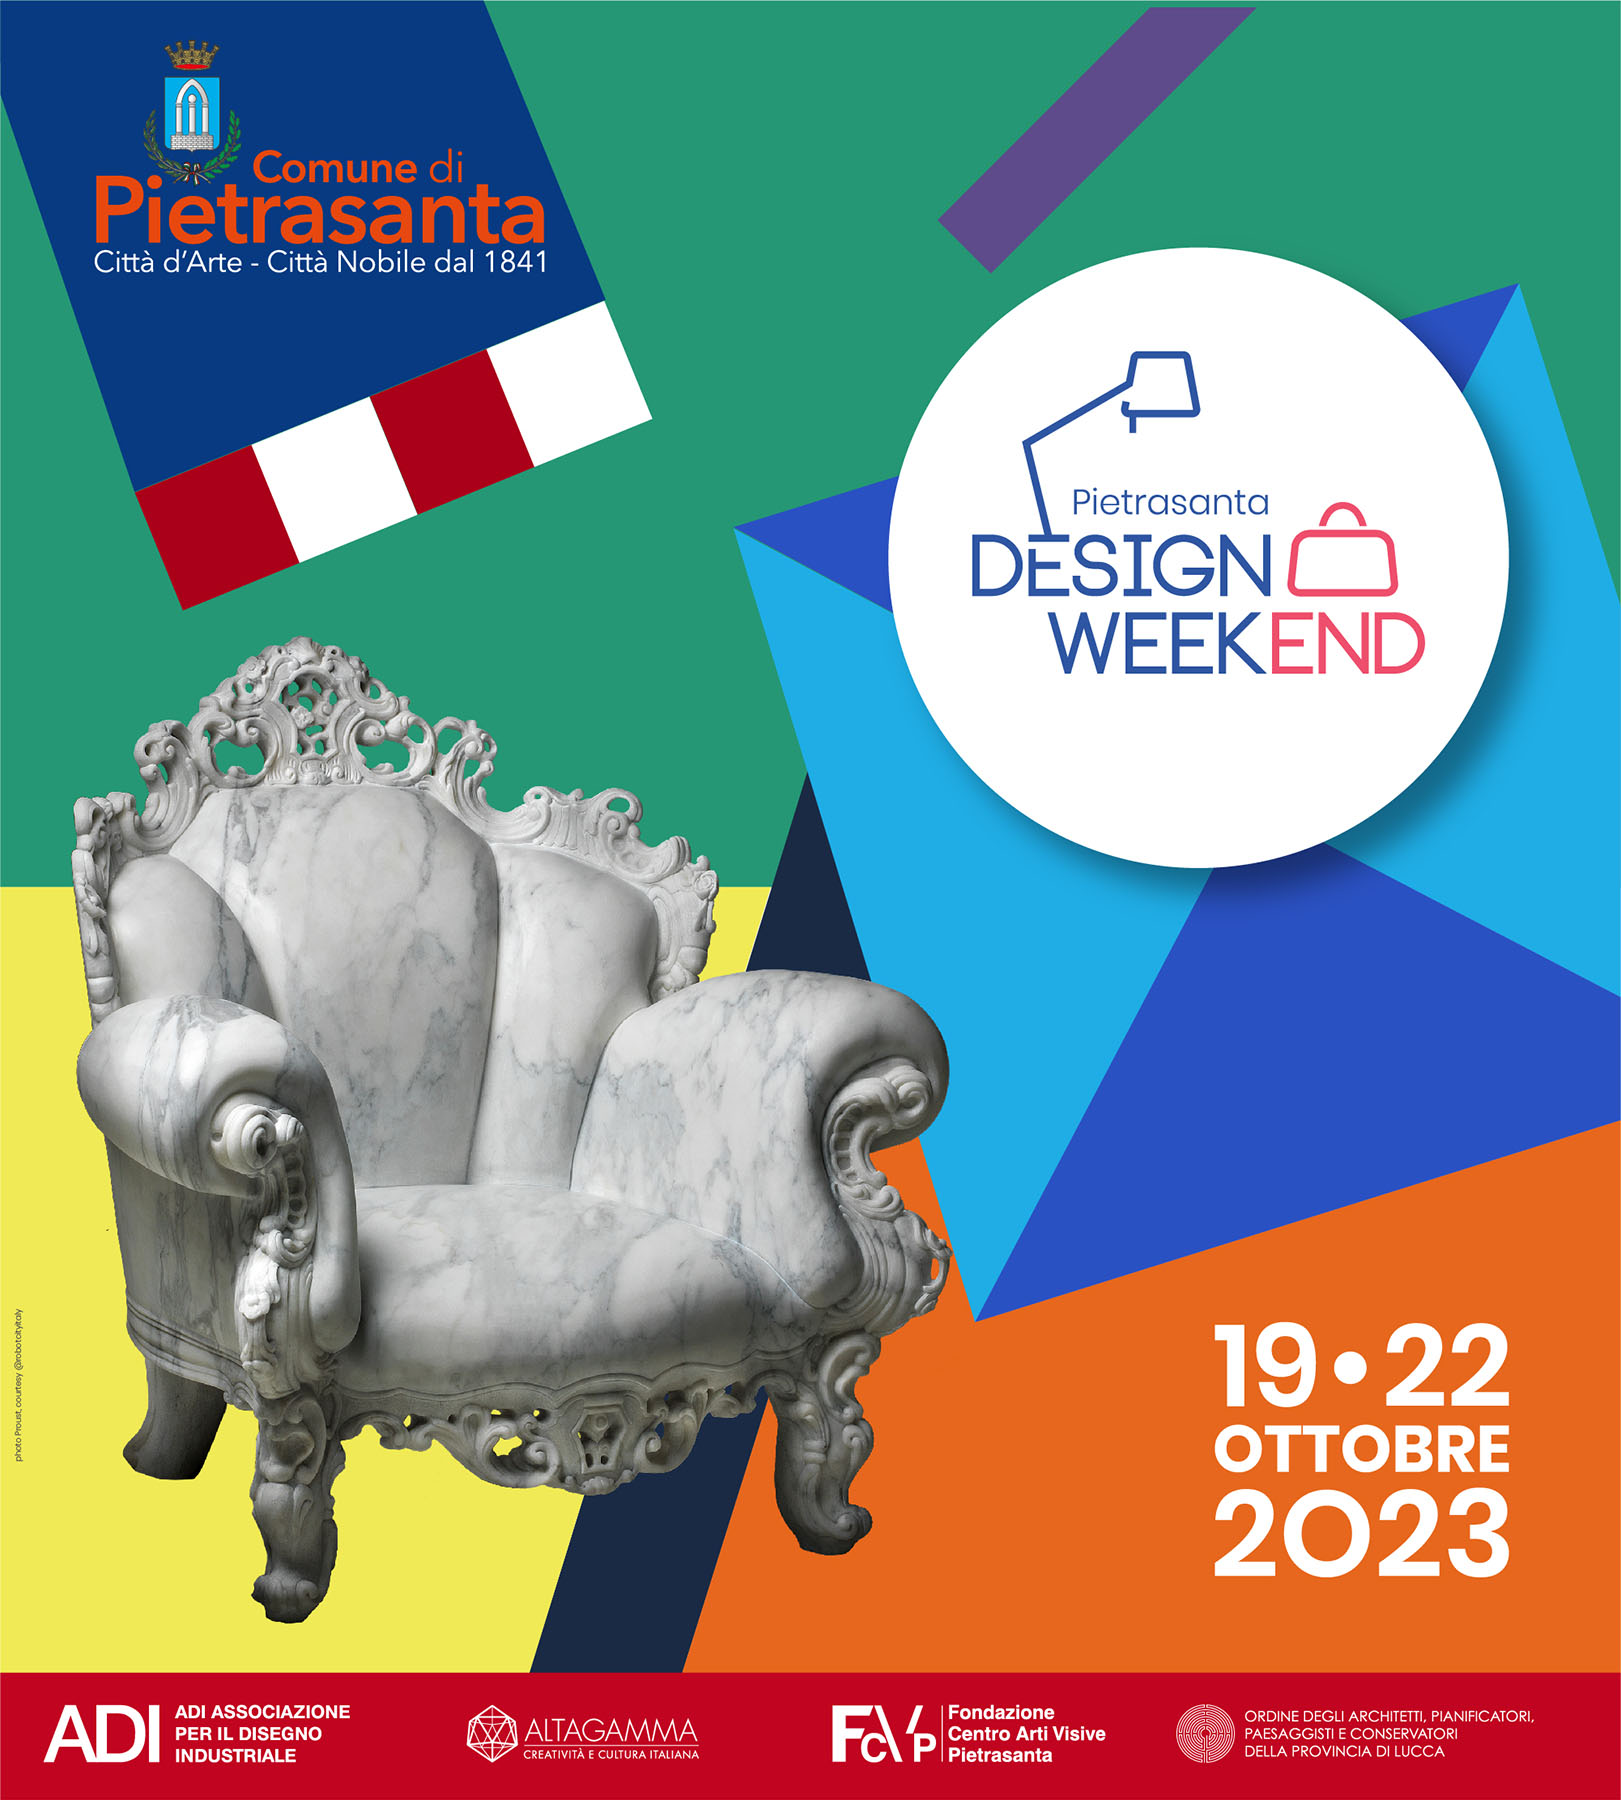 Pietrasanta Design Weekend 2023